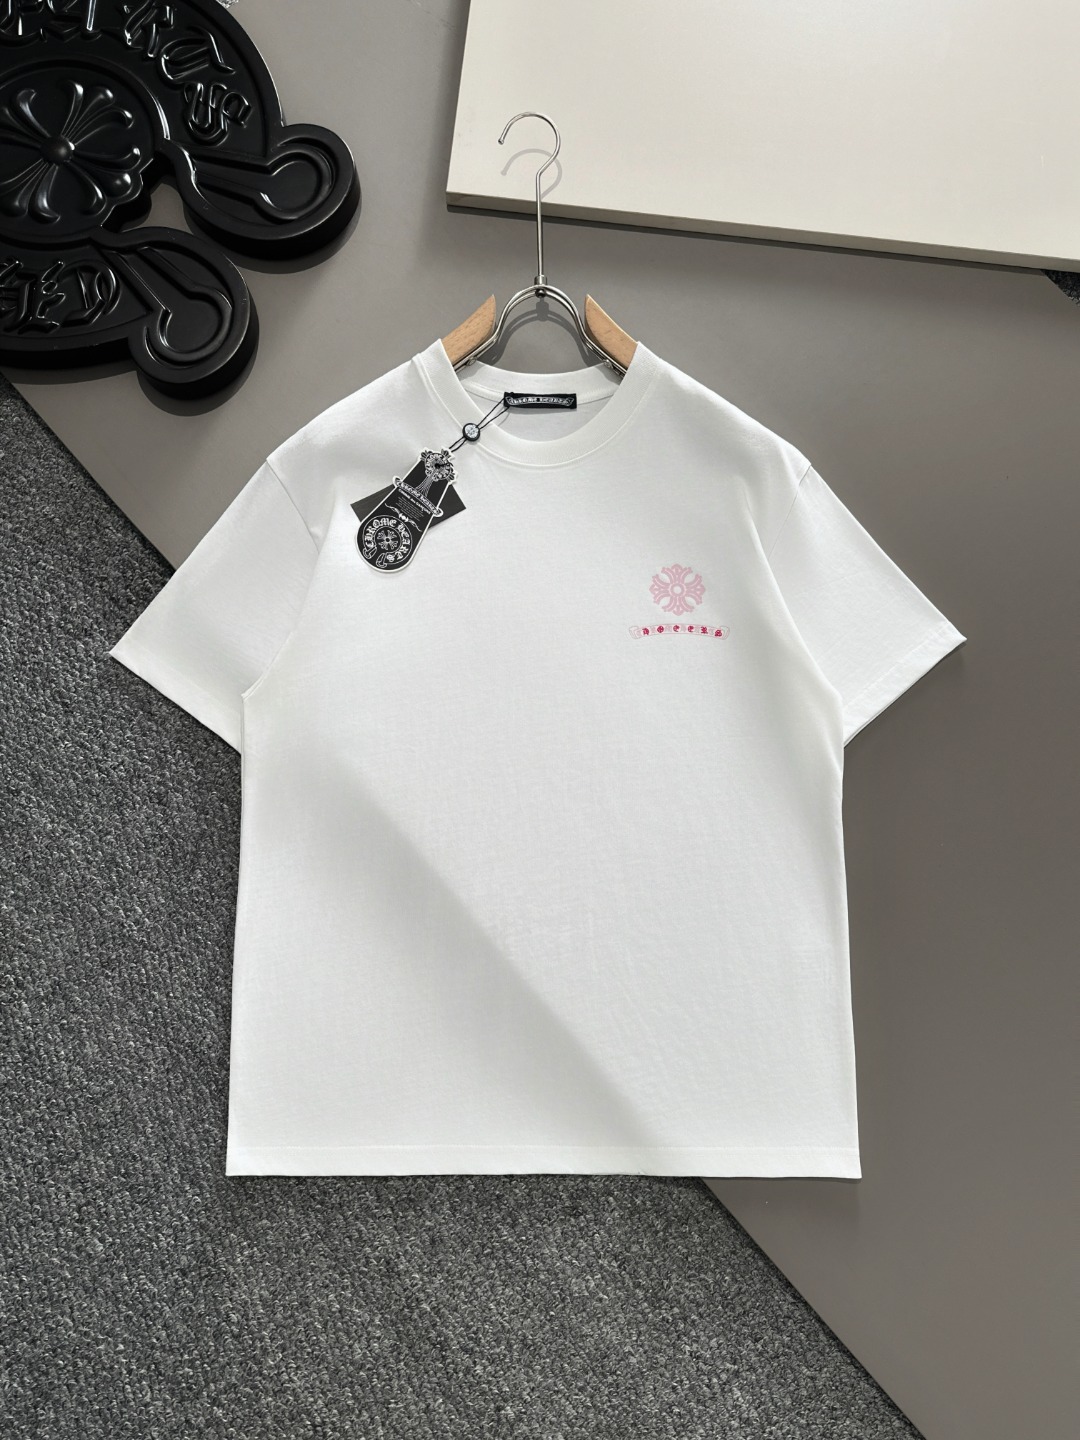 Chrome Hearts Kleding T-Shirt Zwart Wit Katoen Lente/Zomercollectie Fashion Korte mouw